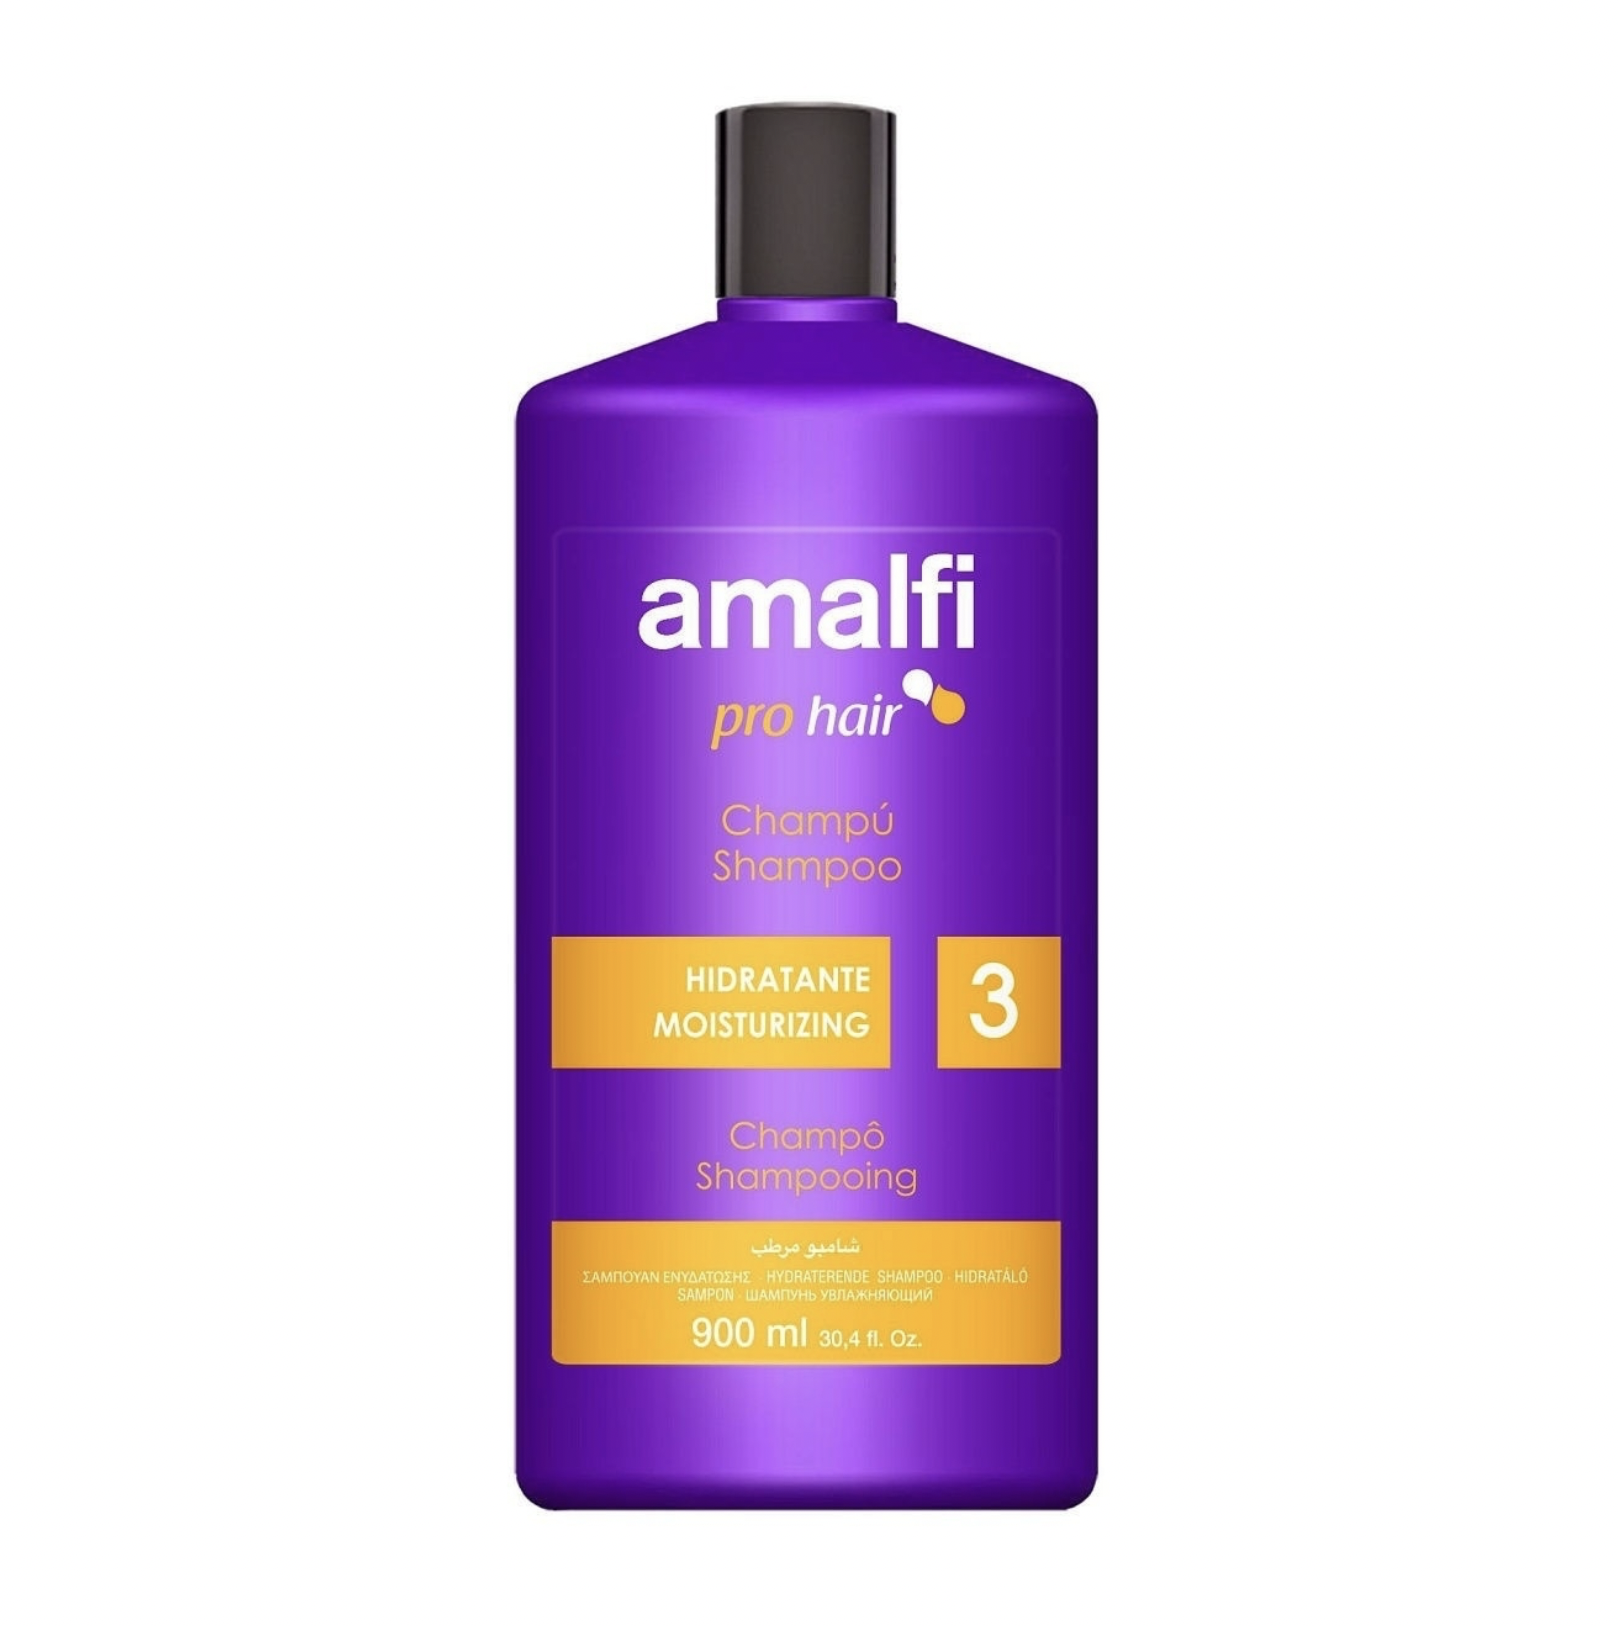   / Amalfi Pro Hair -     Moisturizing 3 900 